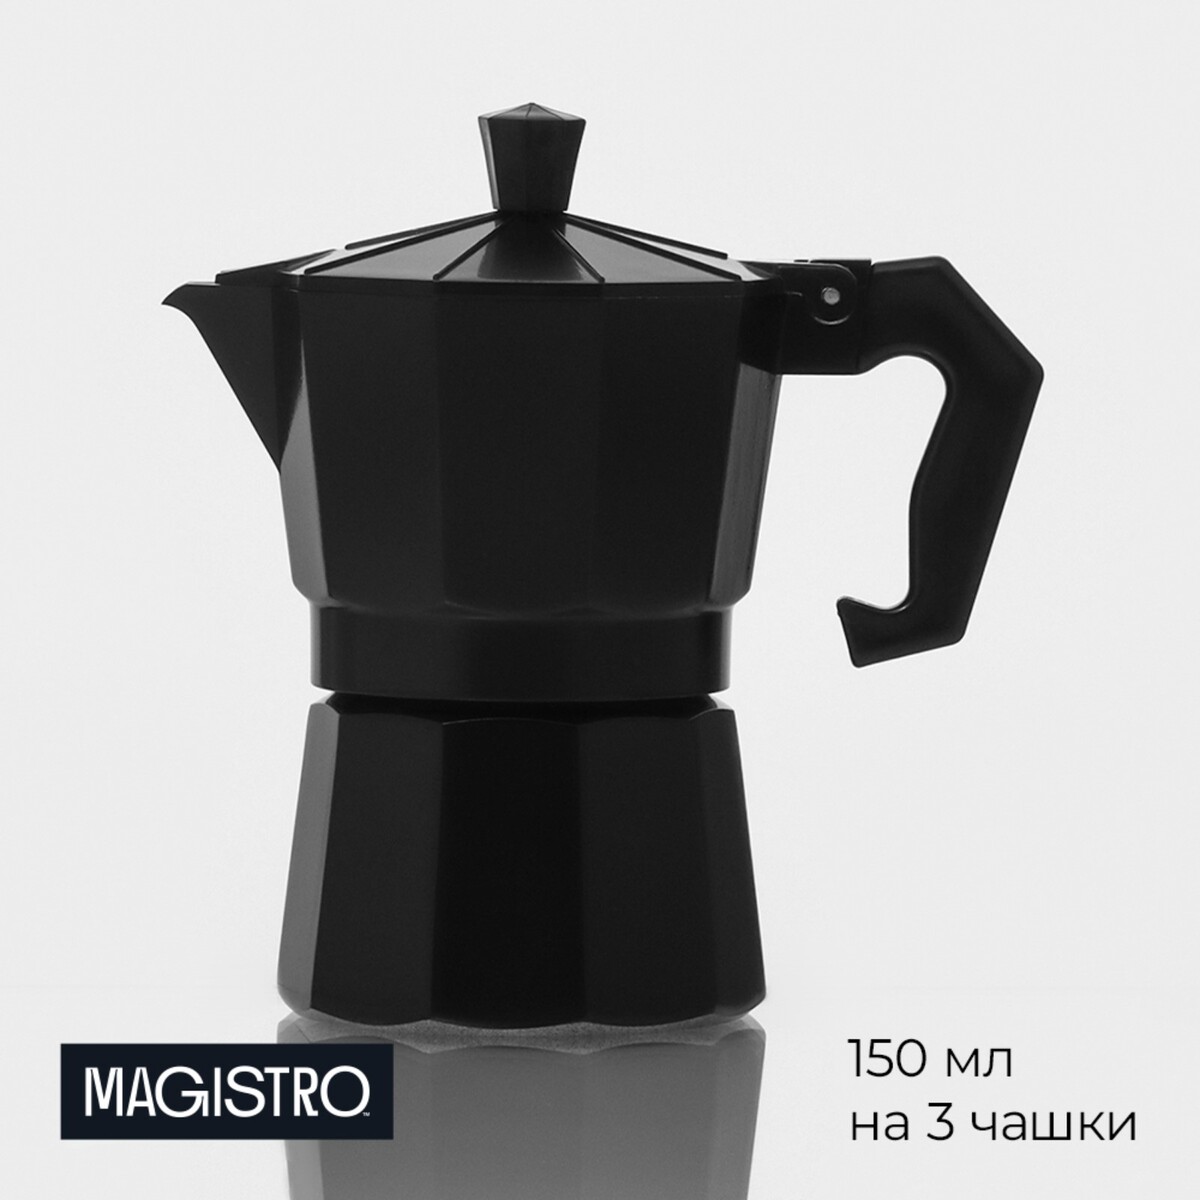 Кофеварка гейзерная magistro alum black, на 3 чашки, 150 мл кофеварка гейзерная доляна alum на 3 чашки 150 мл